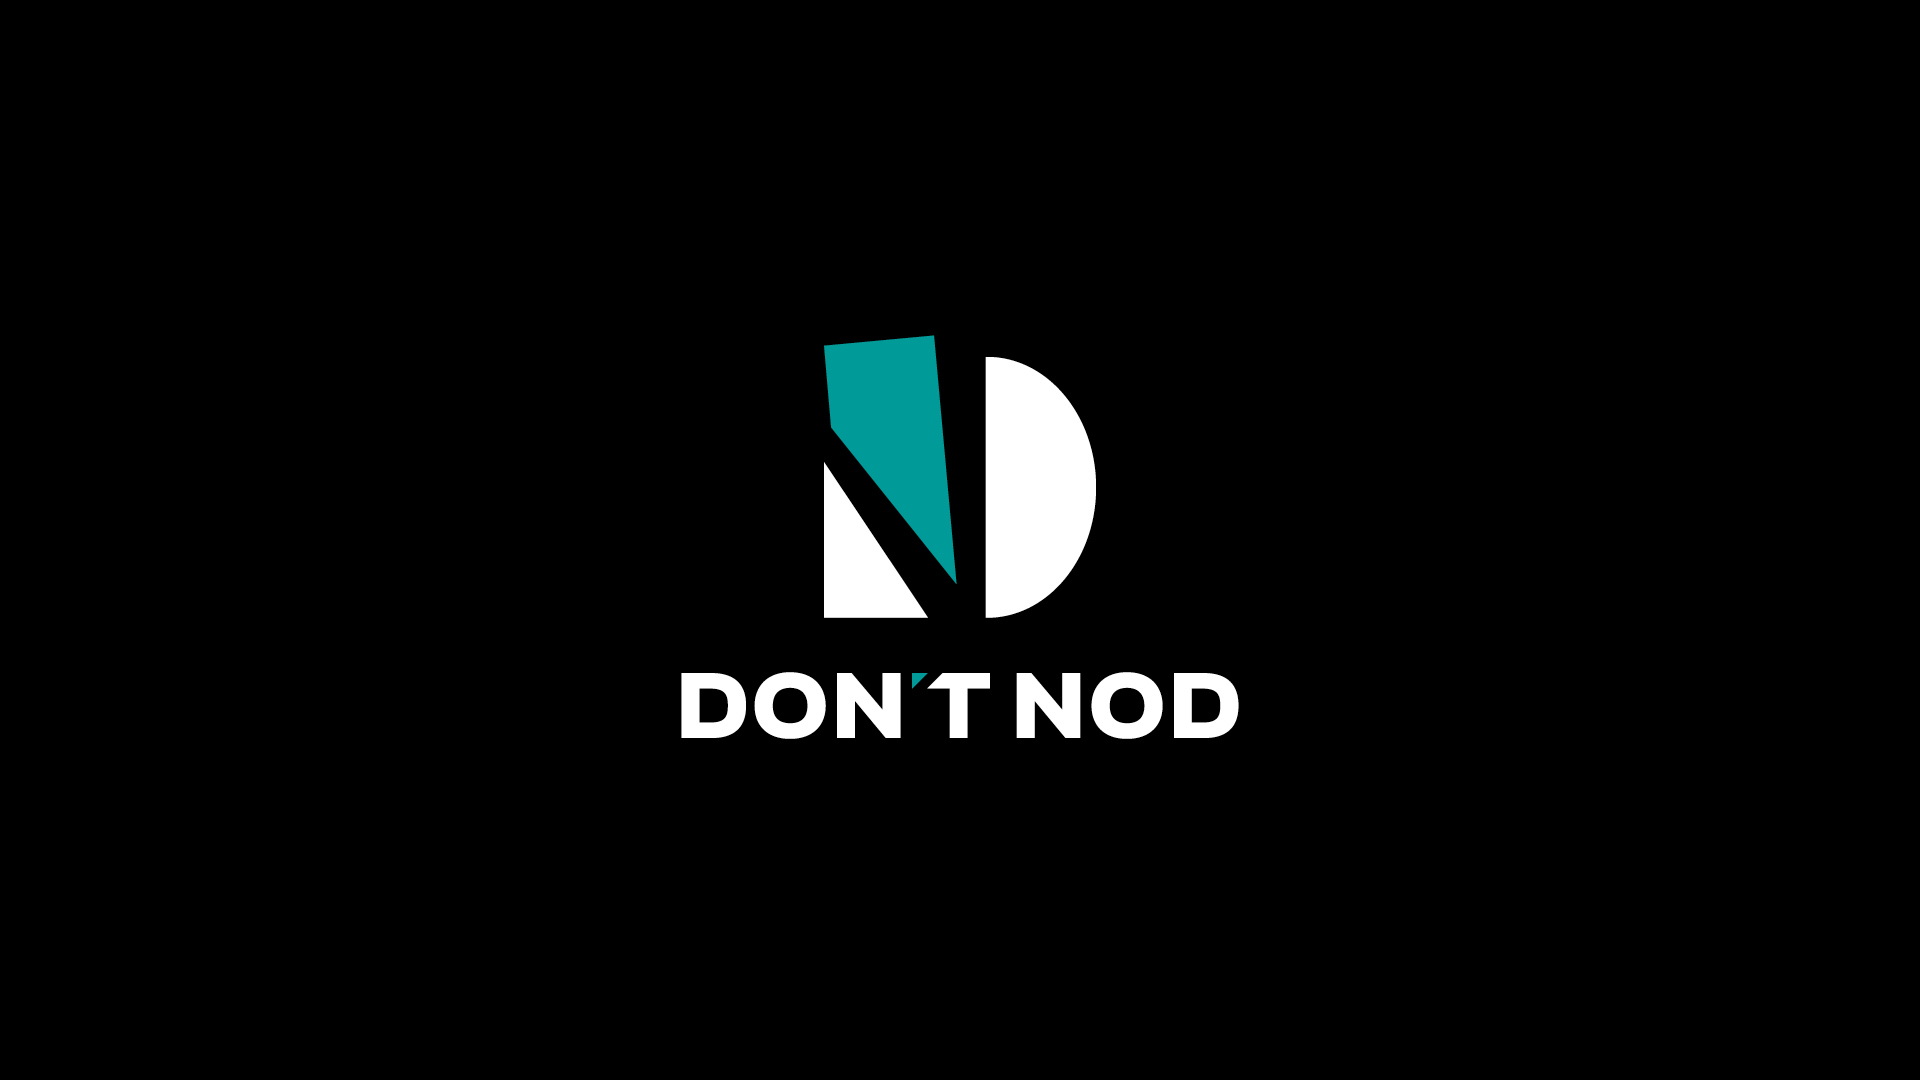 Don't nod